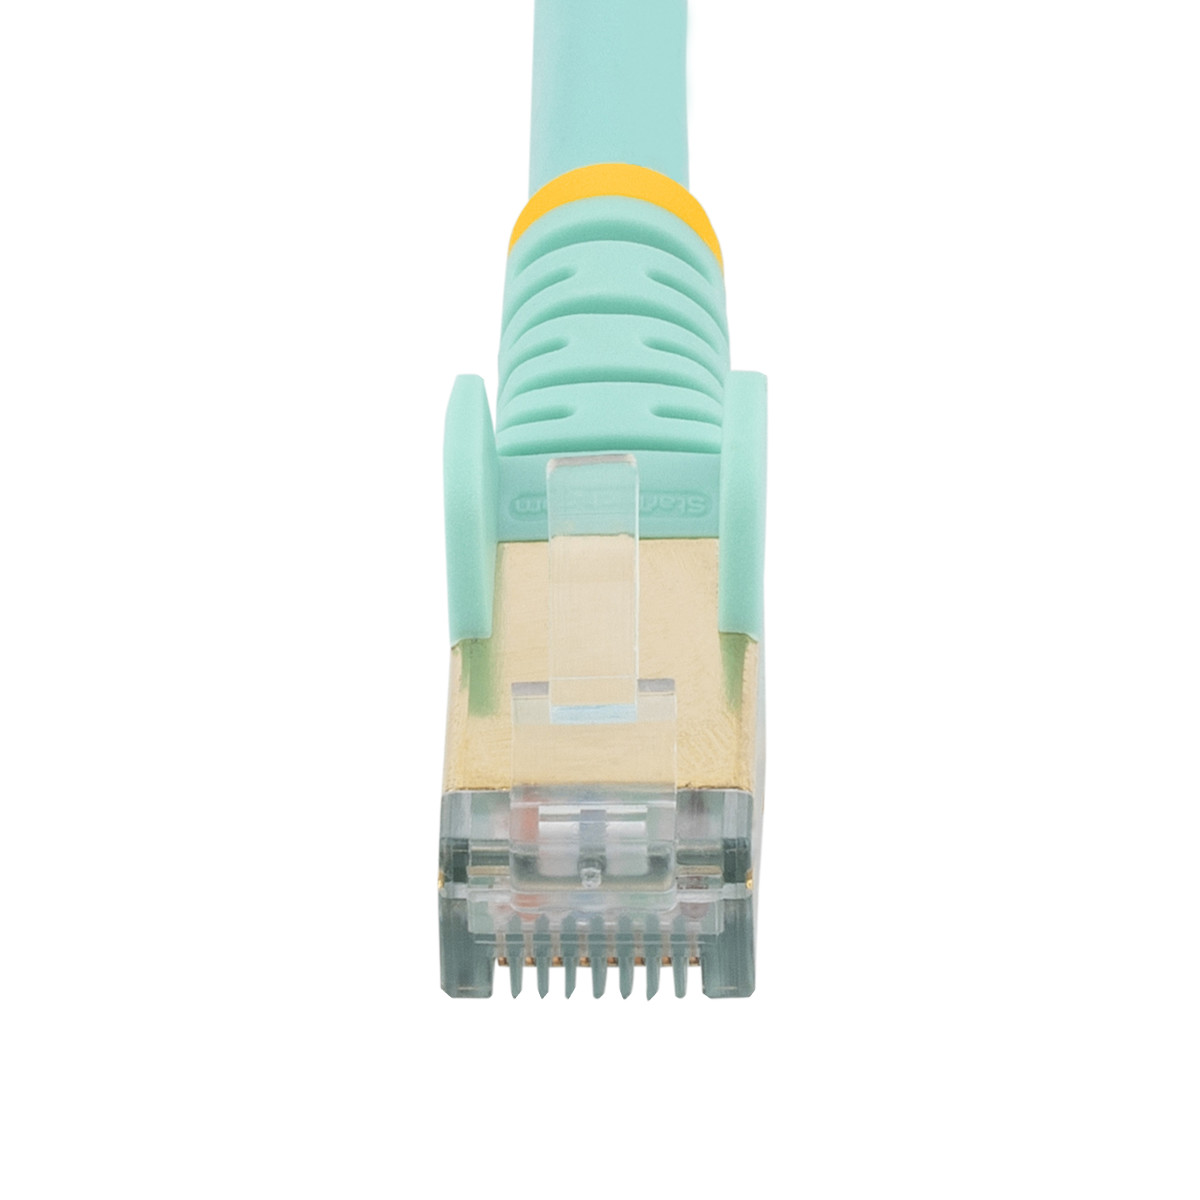 Cable - Aqua CAT6a Ethernet Cable 5m